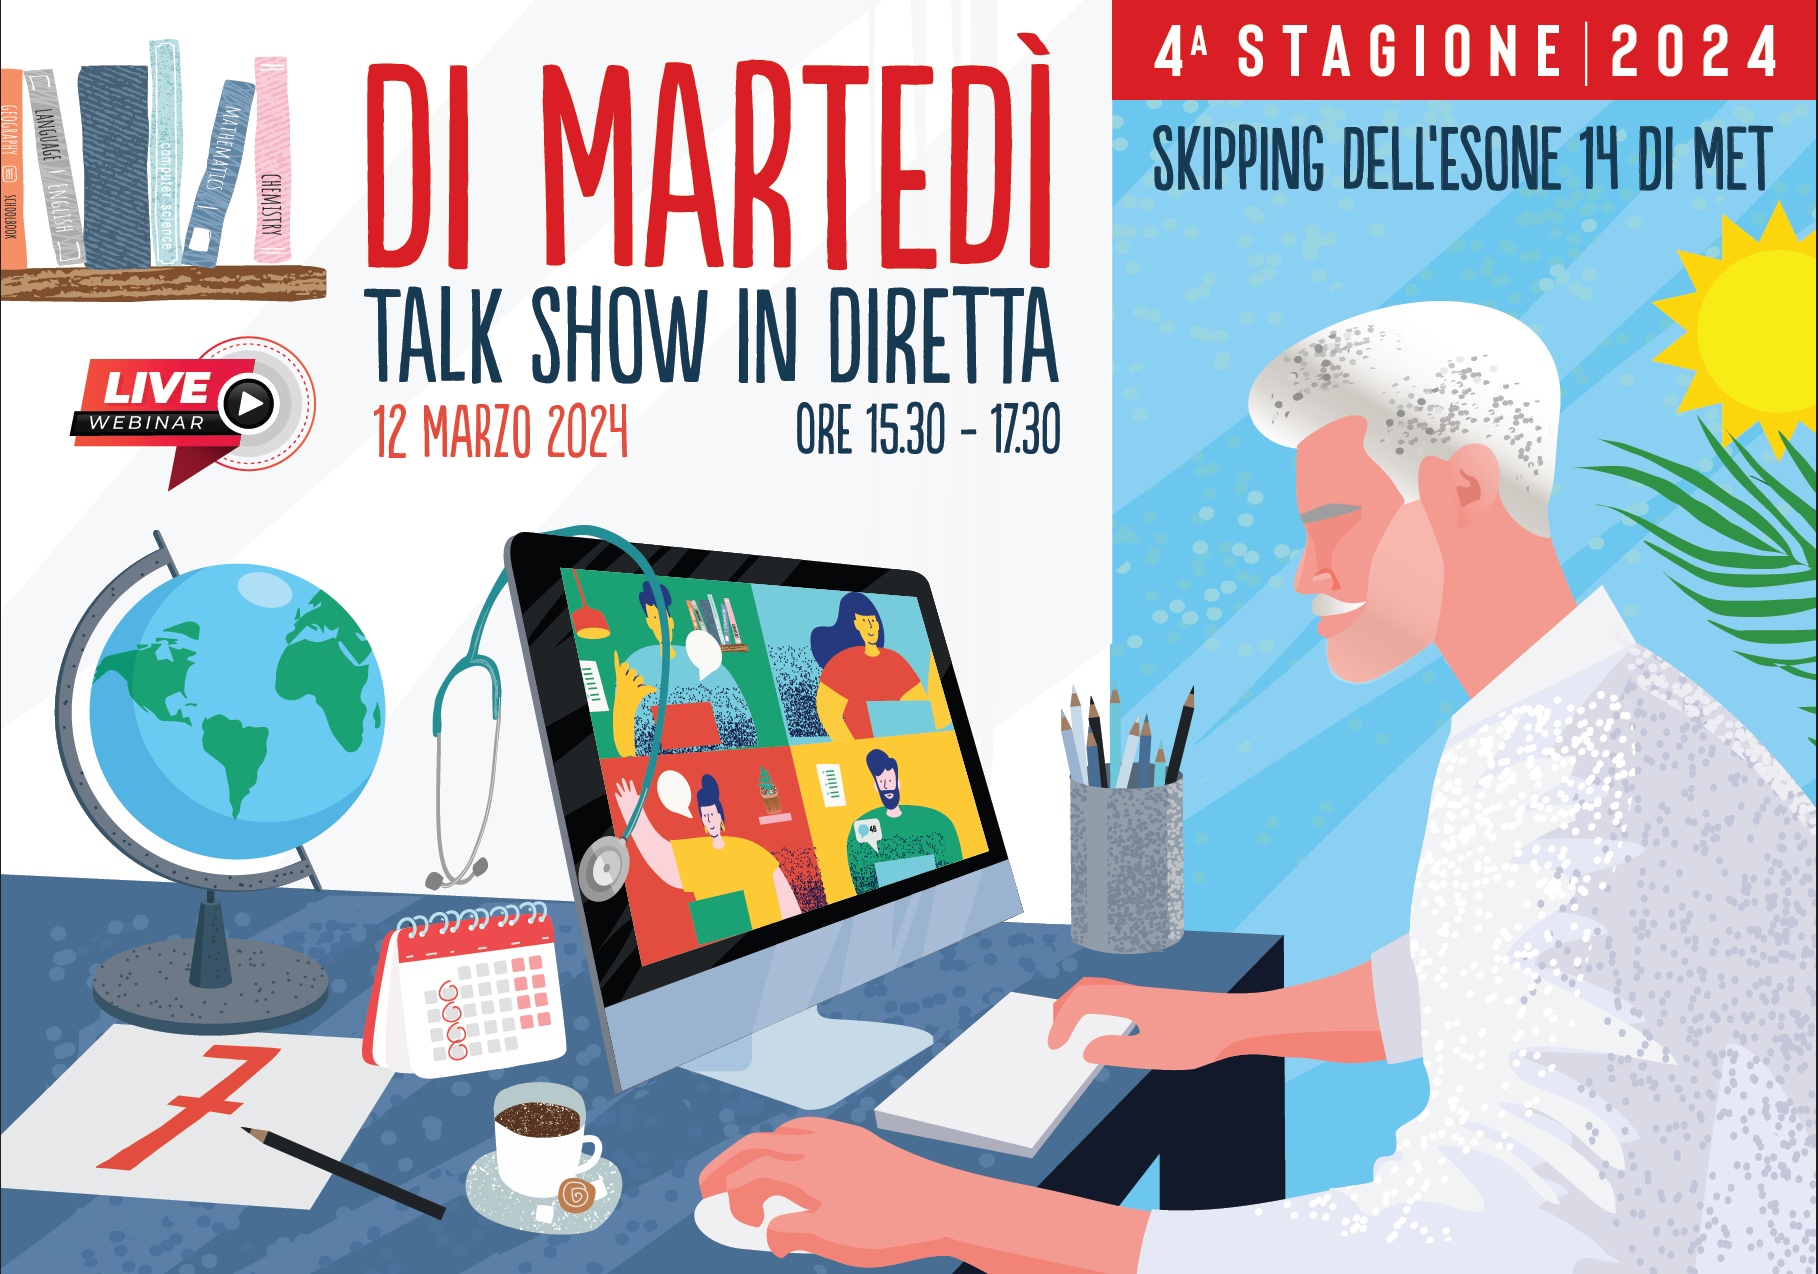 DI MARTEDI': TALK SHOW IN DIRETTA. SKIPPING DELL’ESONE 14 DI MET